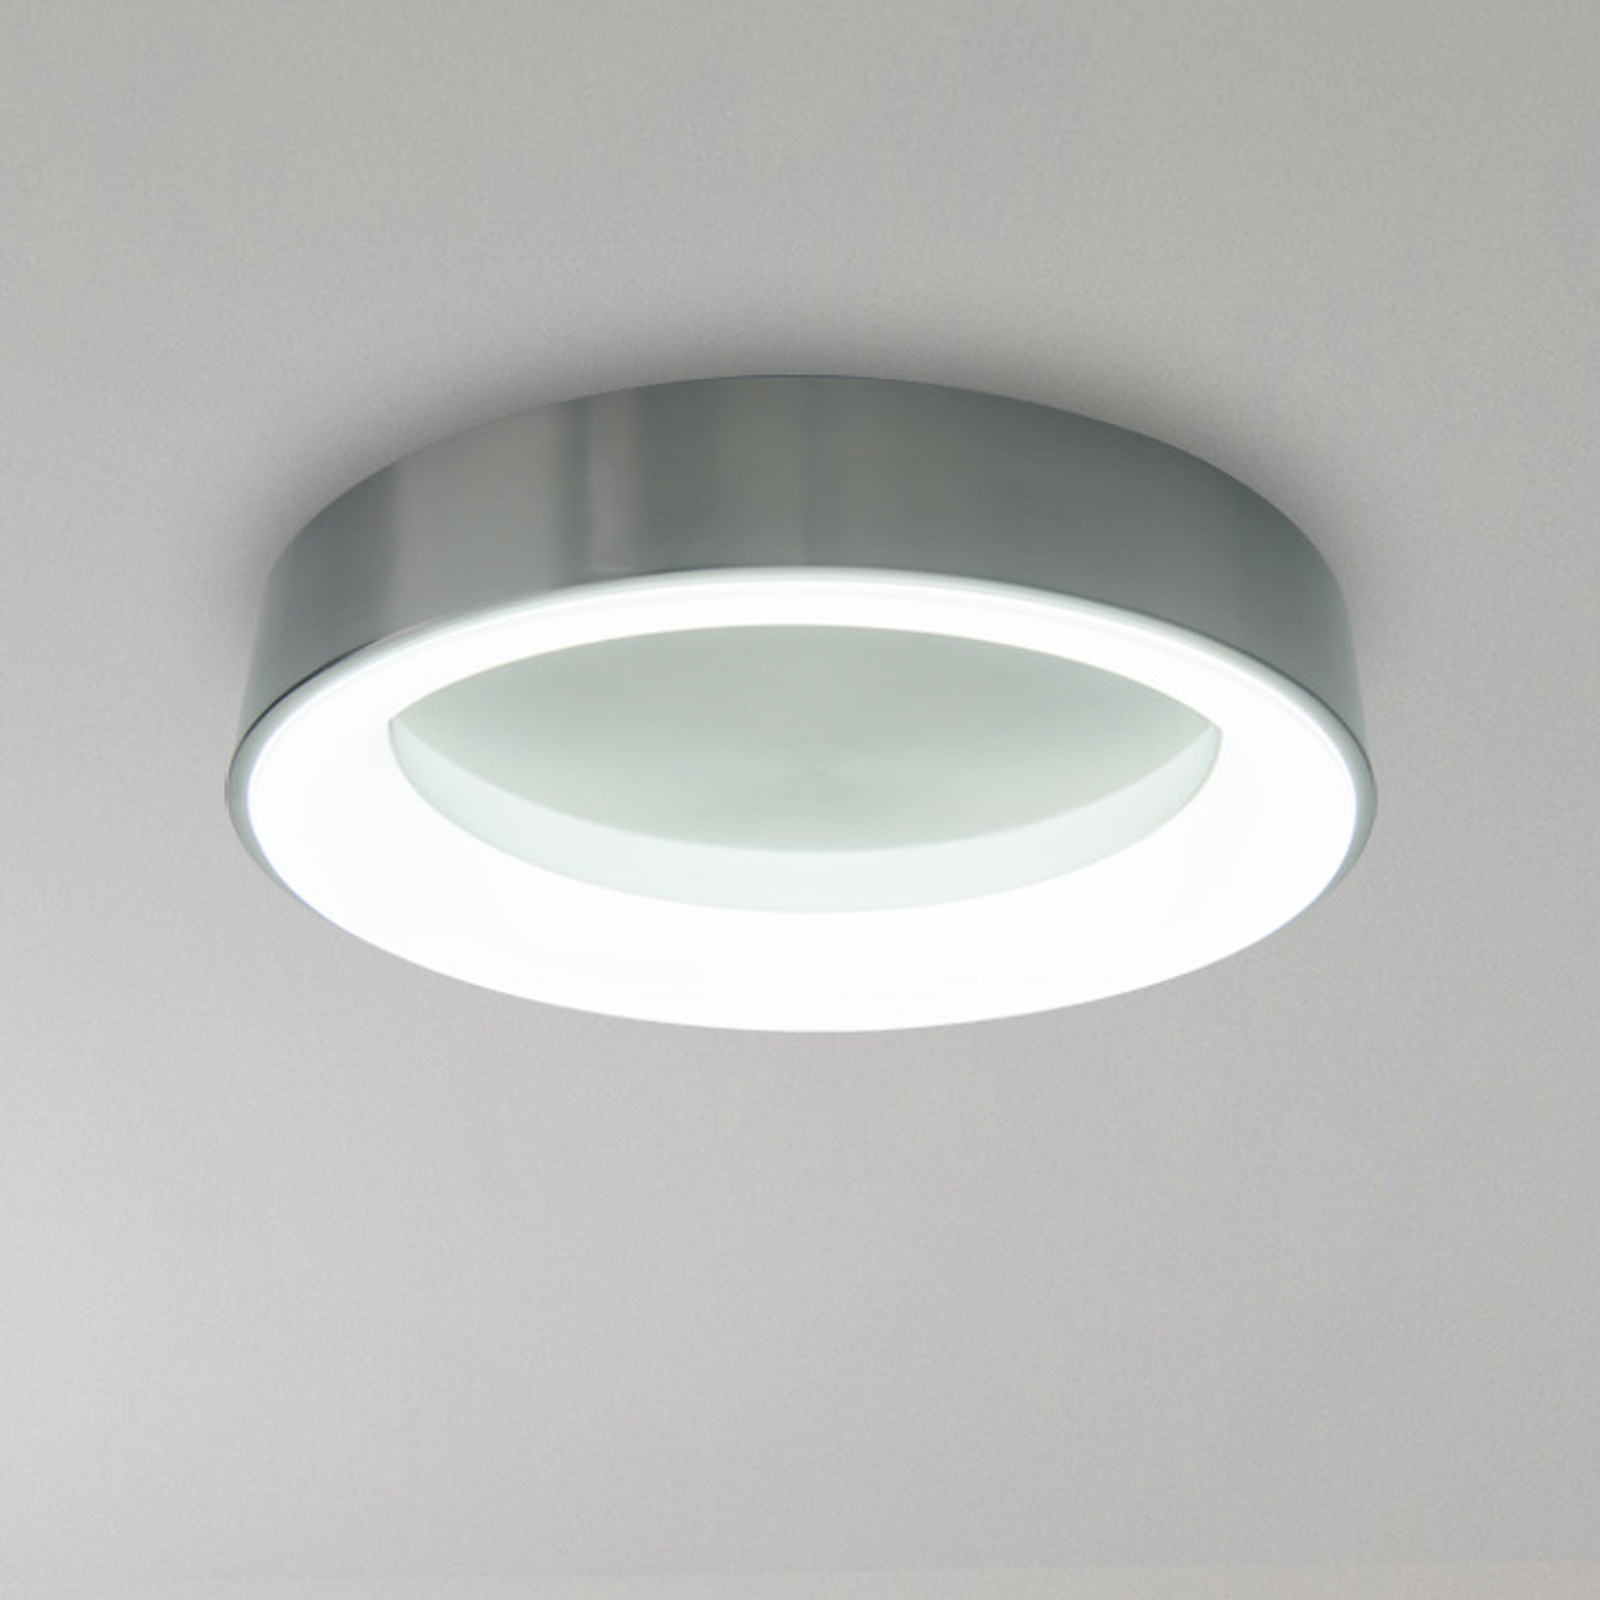 LED plafondlamp 1386961, RGBW, afstandsbediening